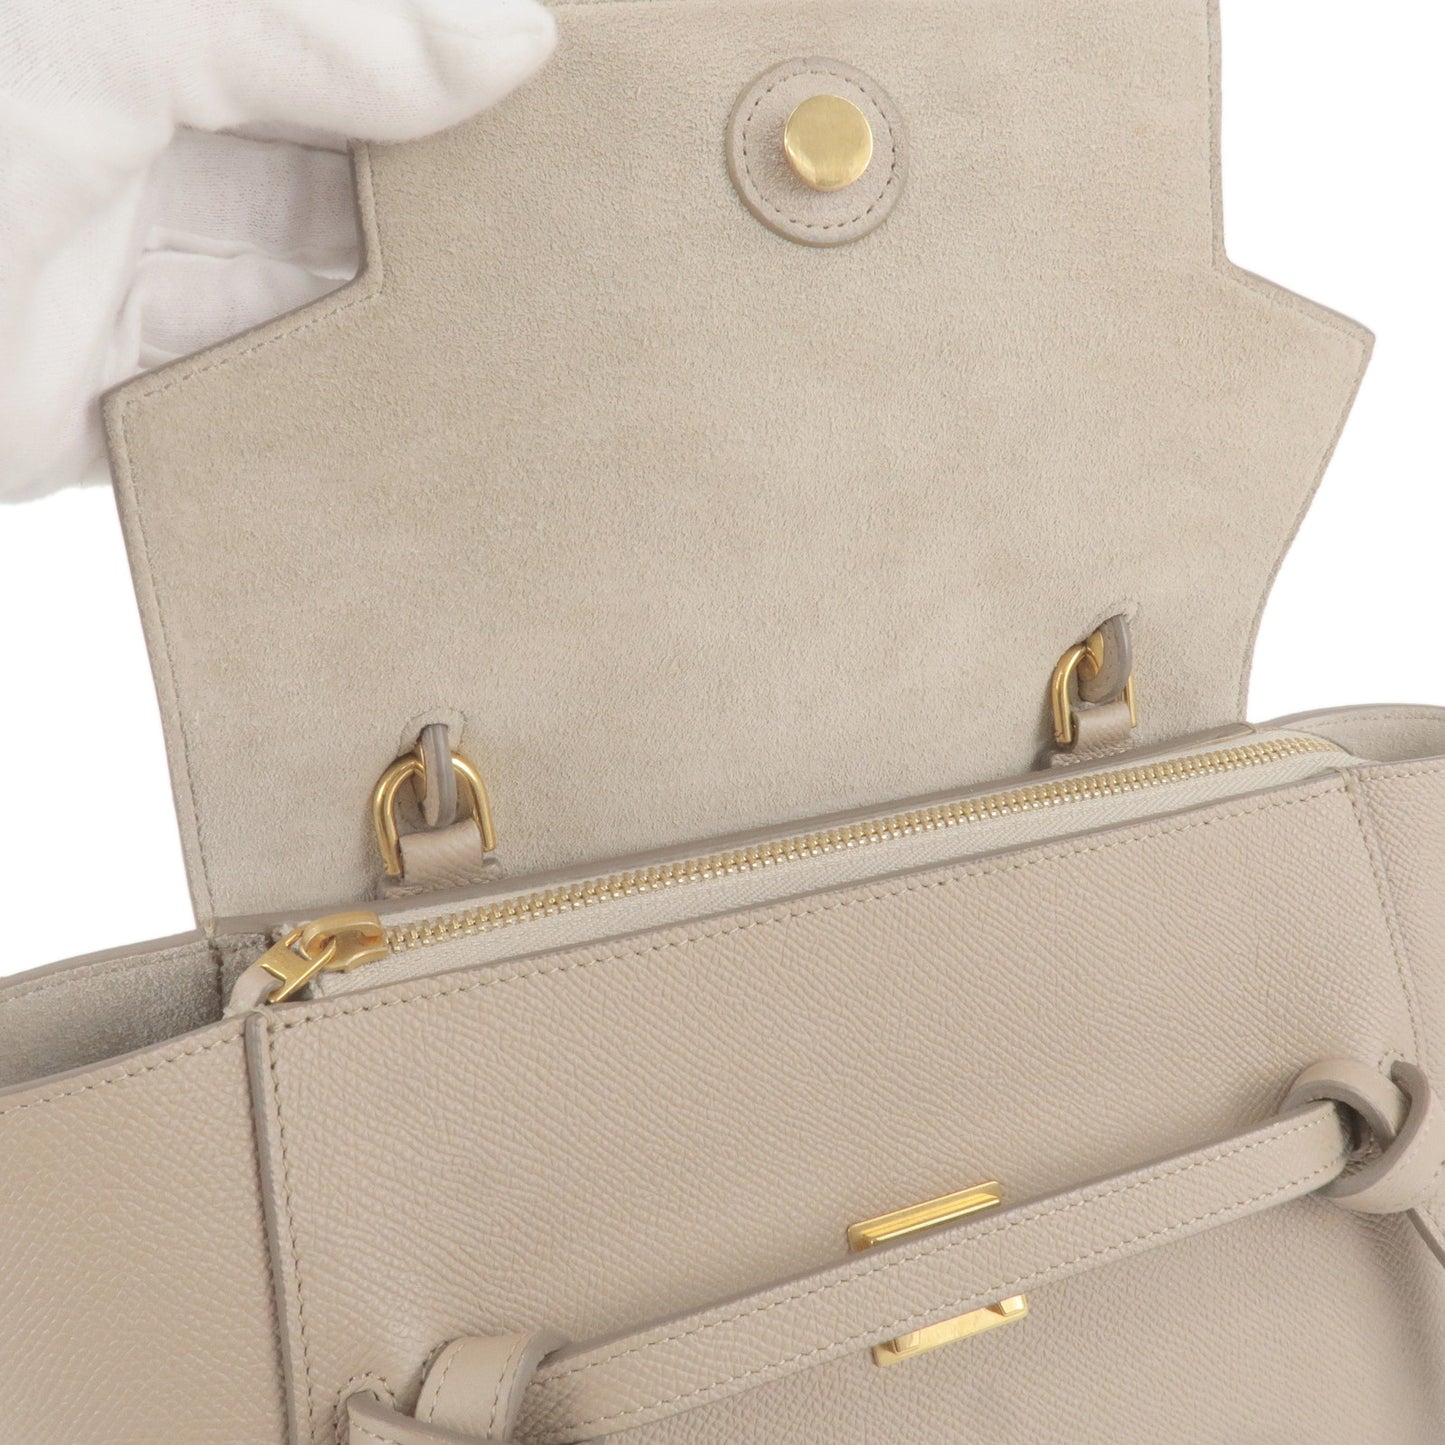 CELINE Leather Micro Belt Bag 2Way Hand Bag Light Taupe 189153